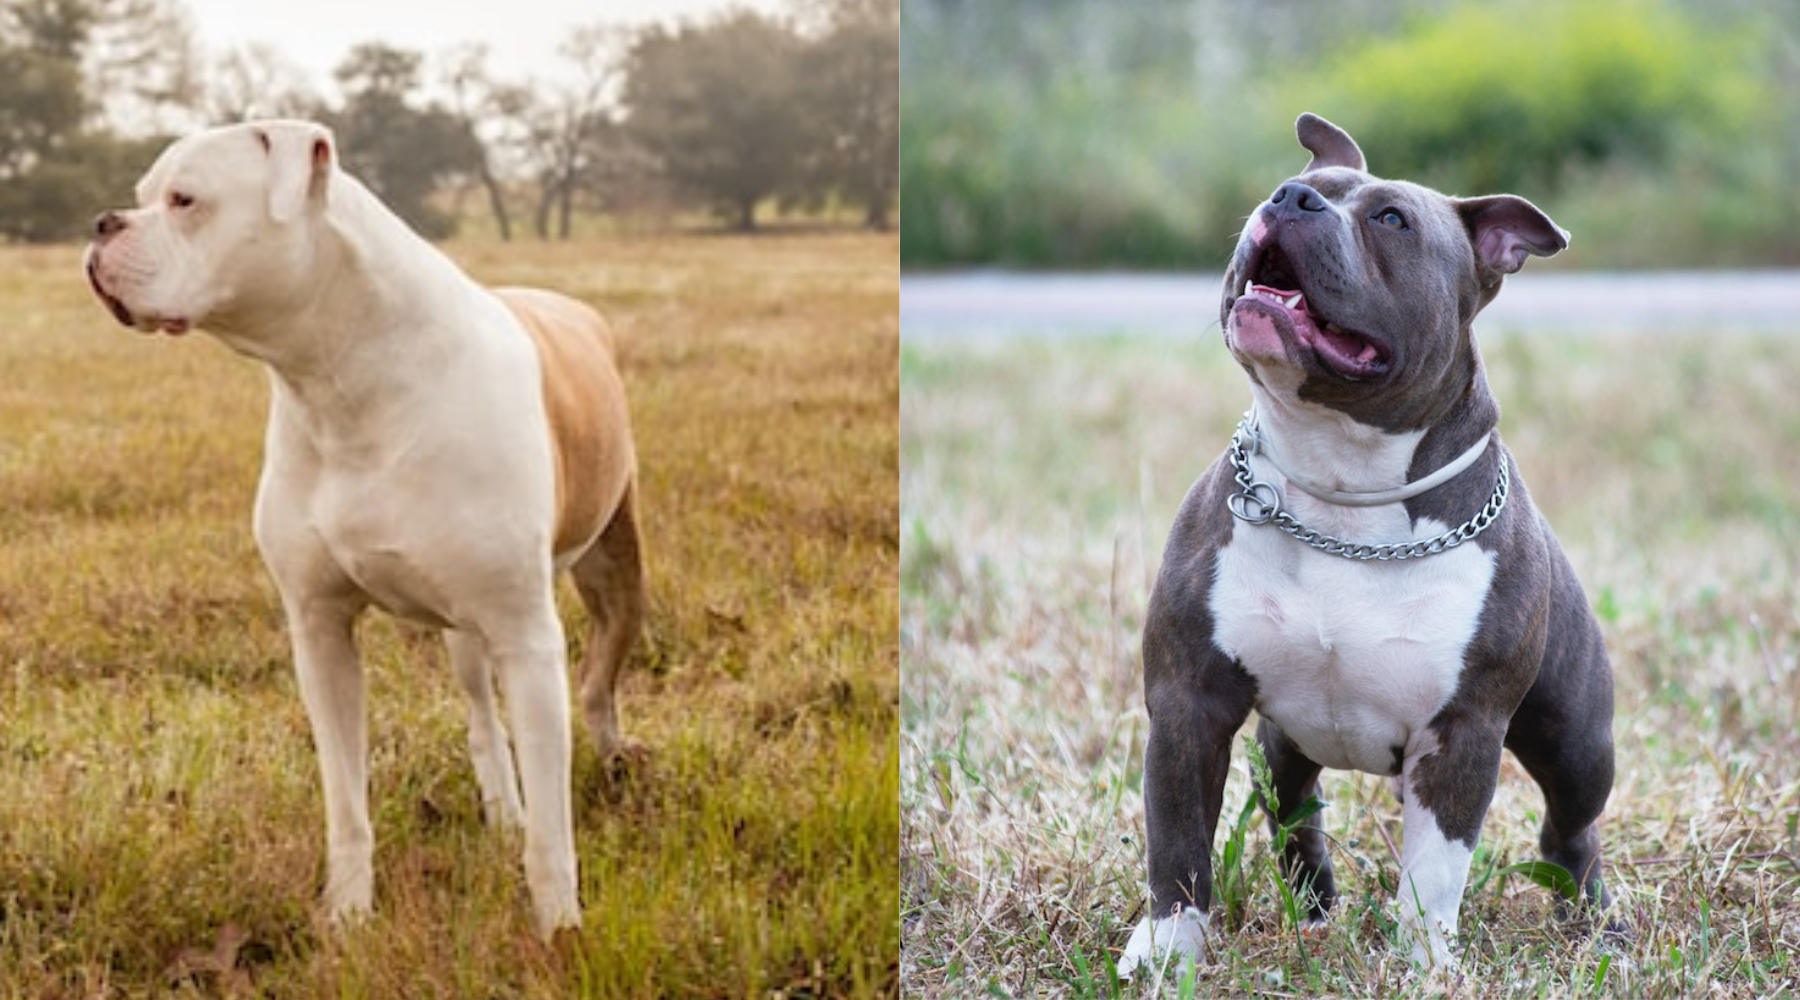 are pitbull and bulldog the same?